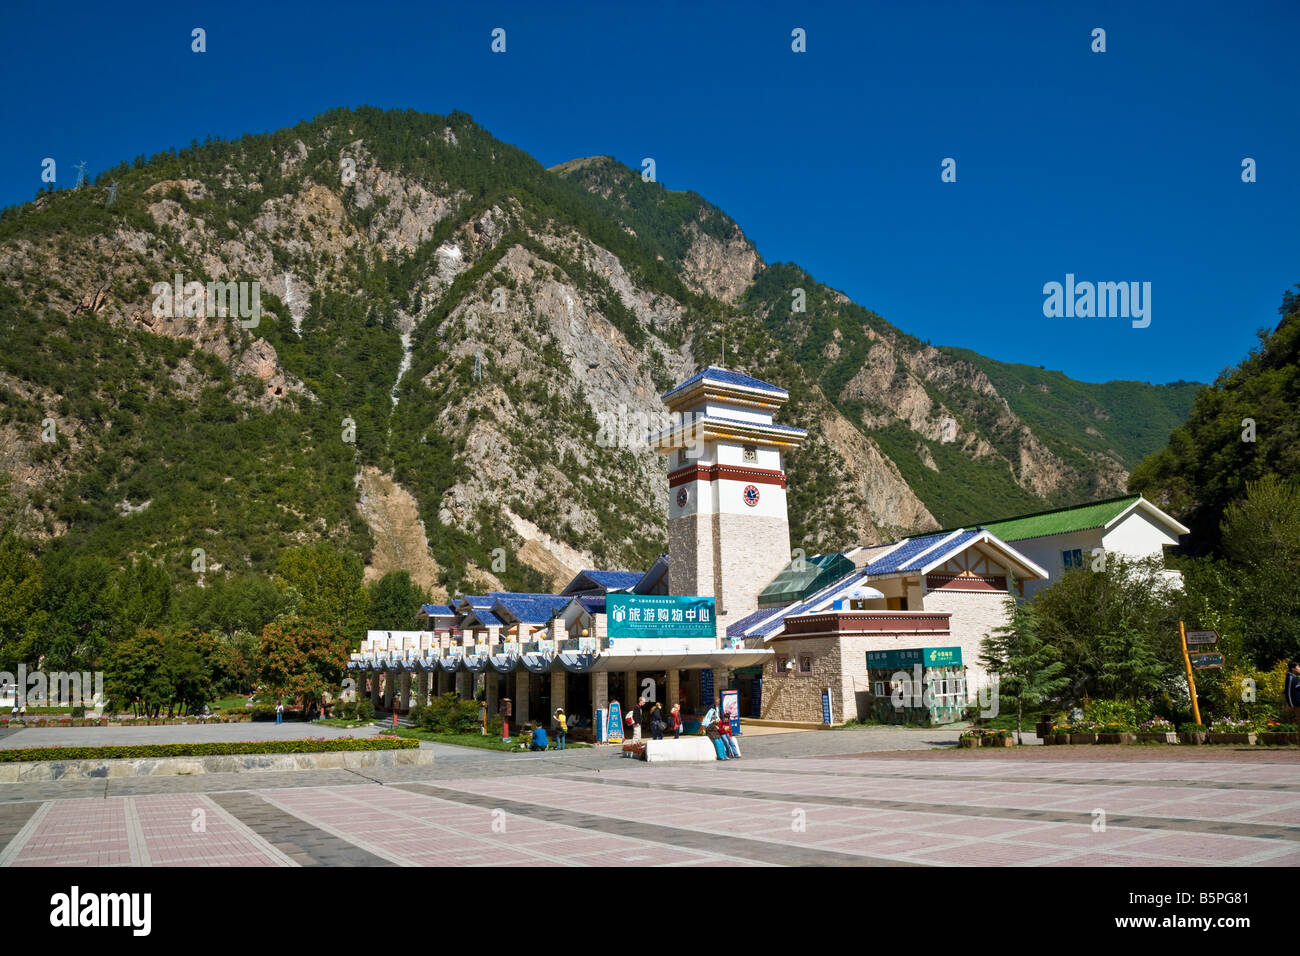 Shopping area at entrance to Jiuzhaigou nature reserve Sichuan Province China. JMH3568 Stock Photo